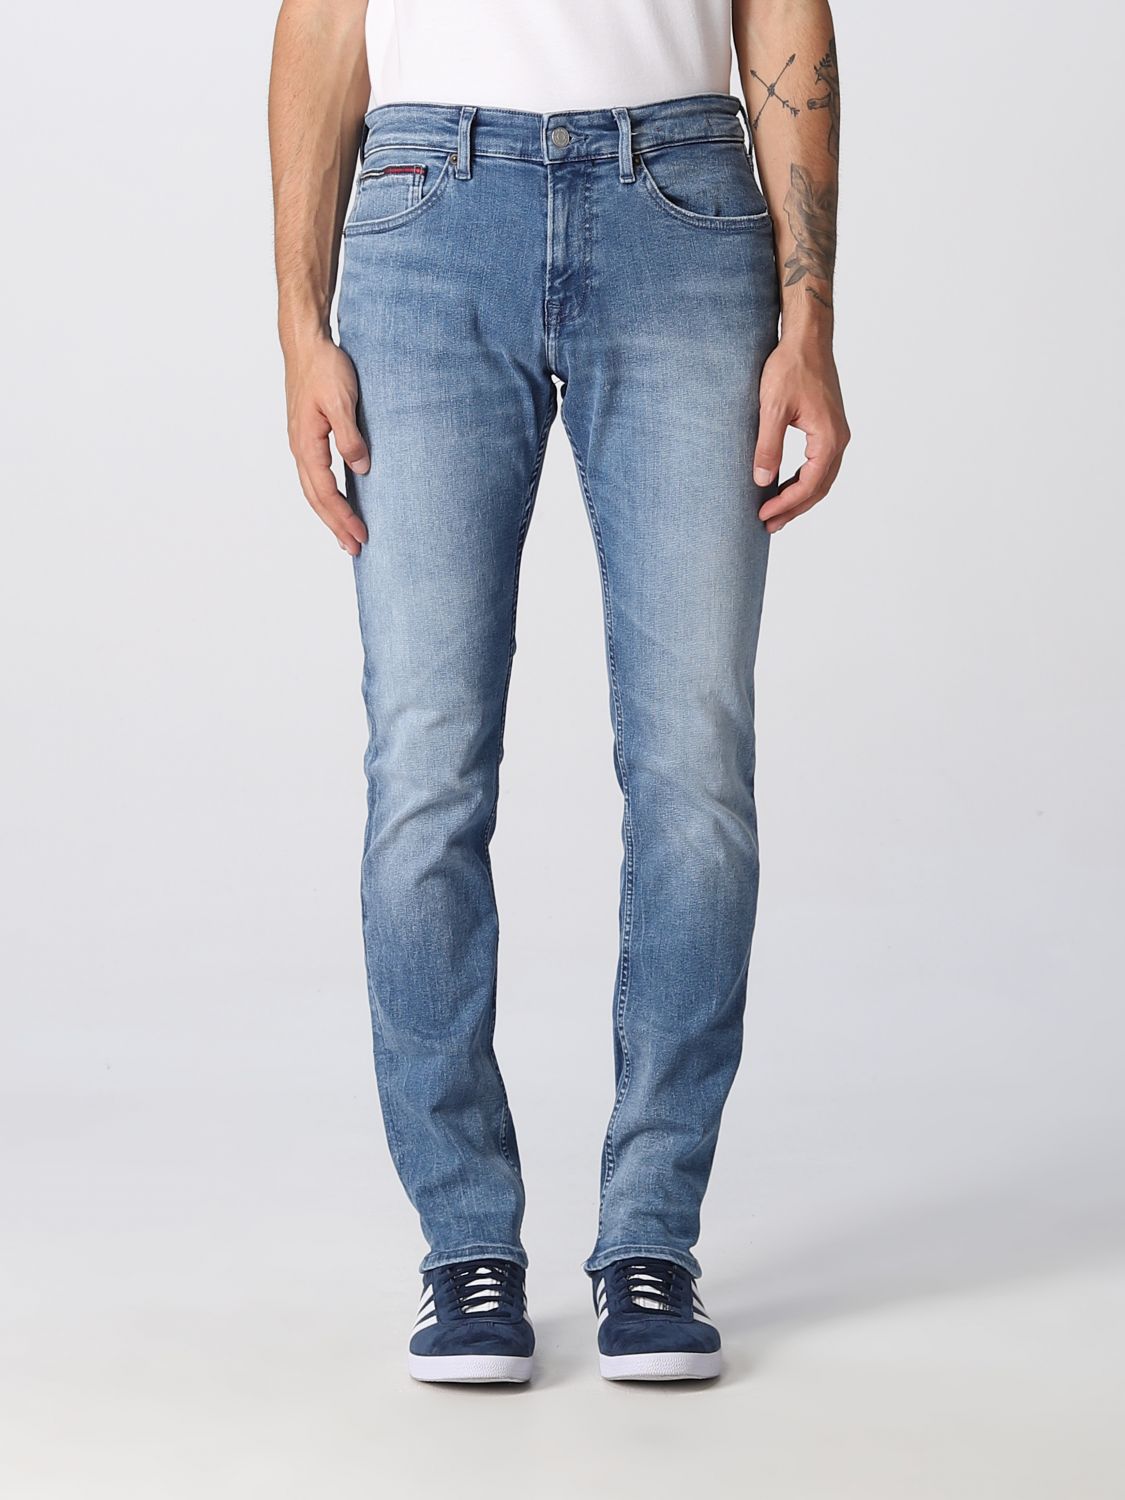 TOMMY JEANS: jeans for man - Denim | Tommy Jeans jeans DM0DM13685 ...